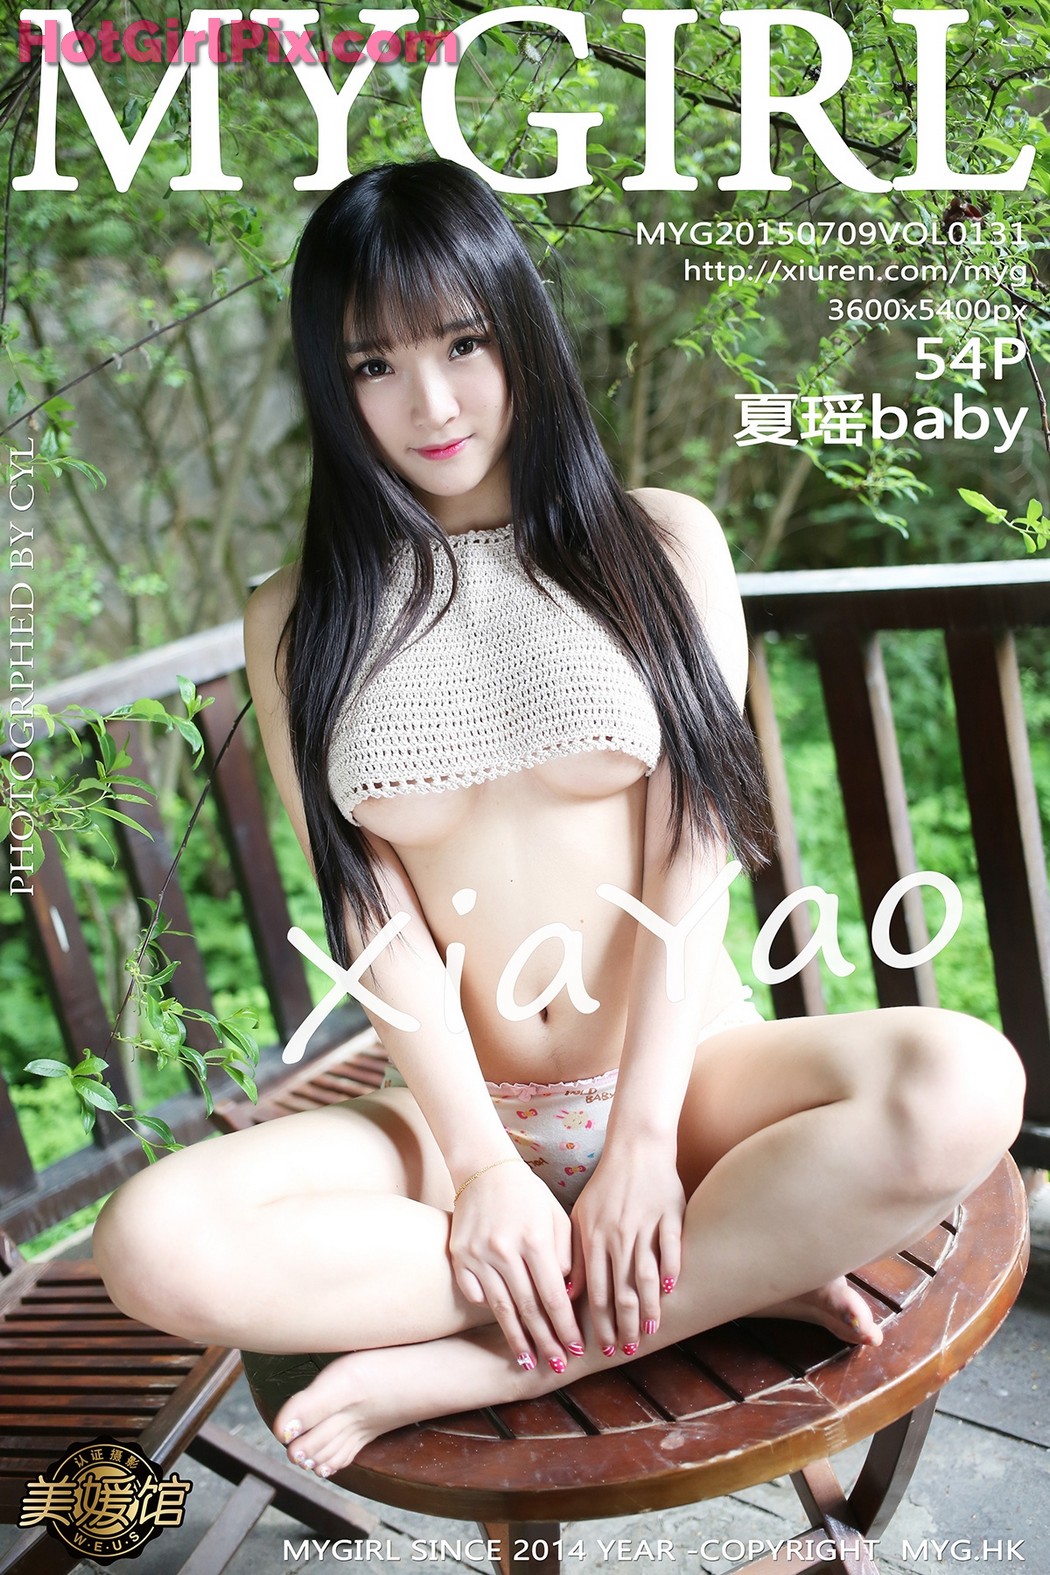 [MyGirl] VOL.131 Xia Yao 夏瑶baby